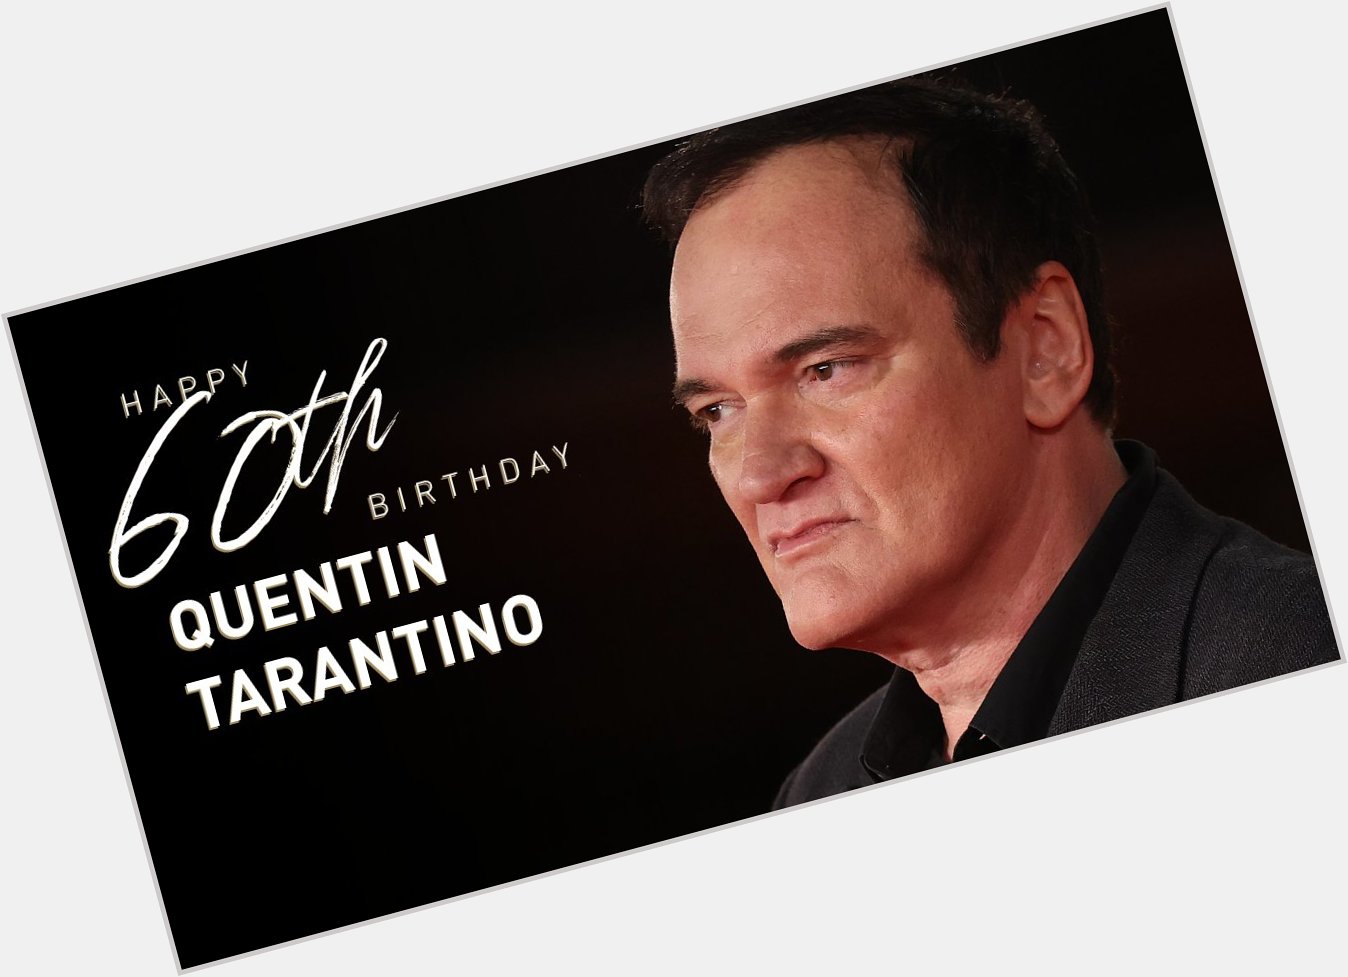 Happy 60th birthday Quentin Tarantino!

Read his tribute here:  